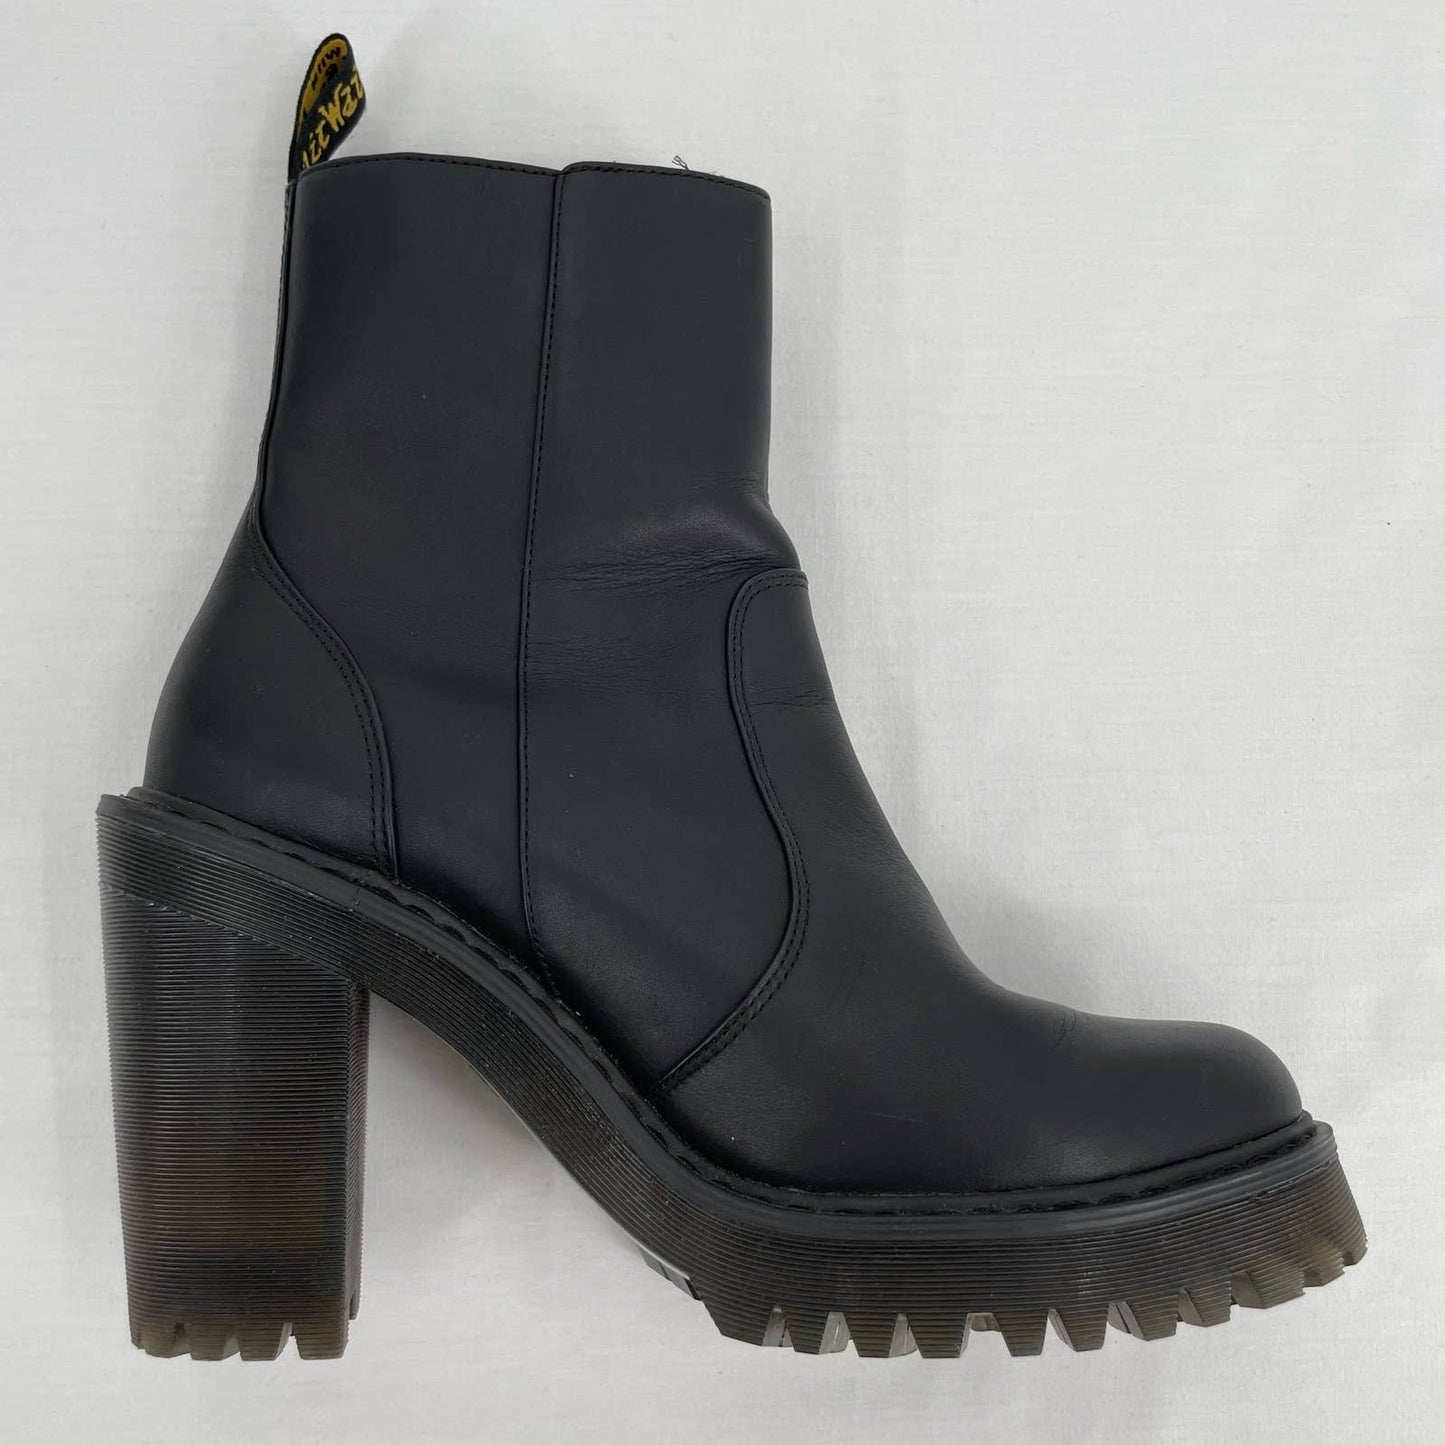 Dr. Martens Magdalena II Black Heeled Boots Zippers Lug Sole Chunky Heel Size 9